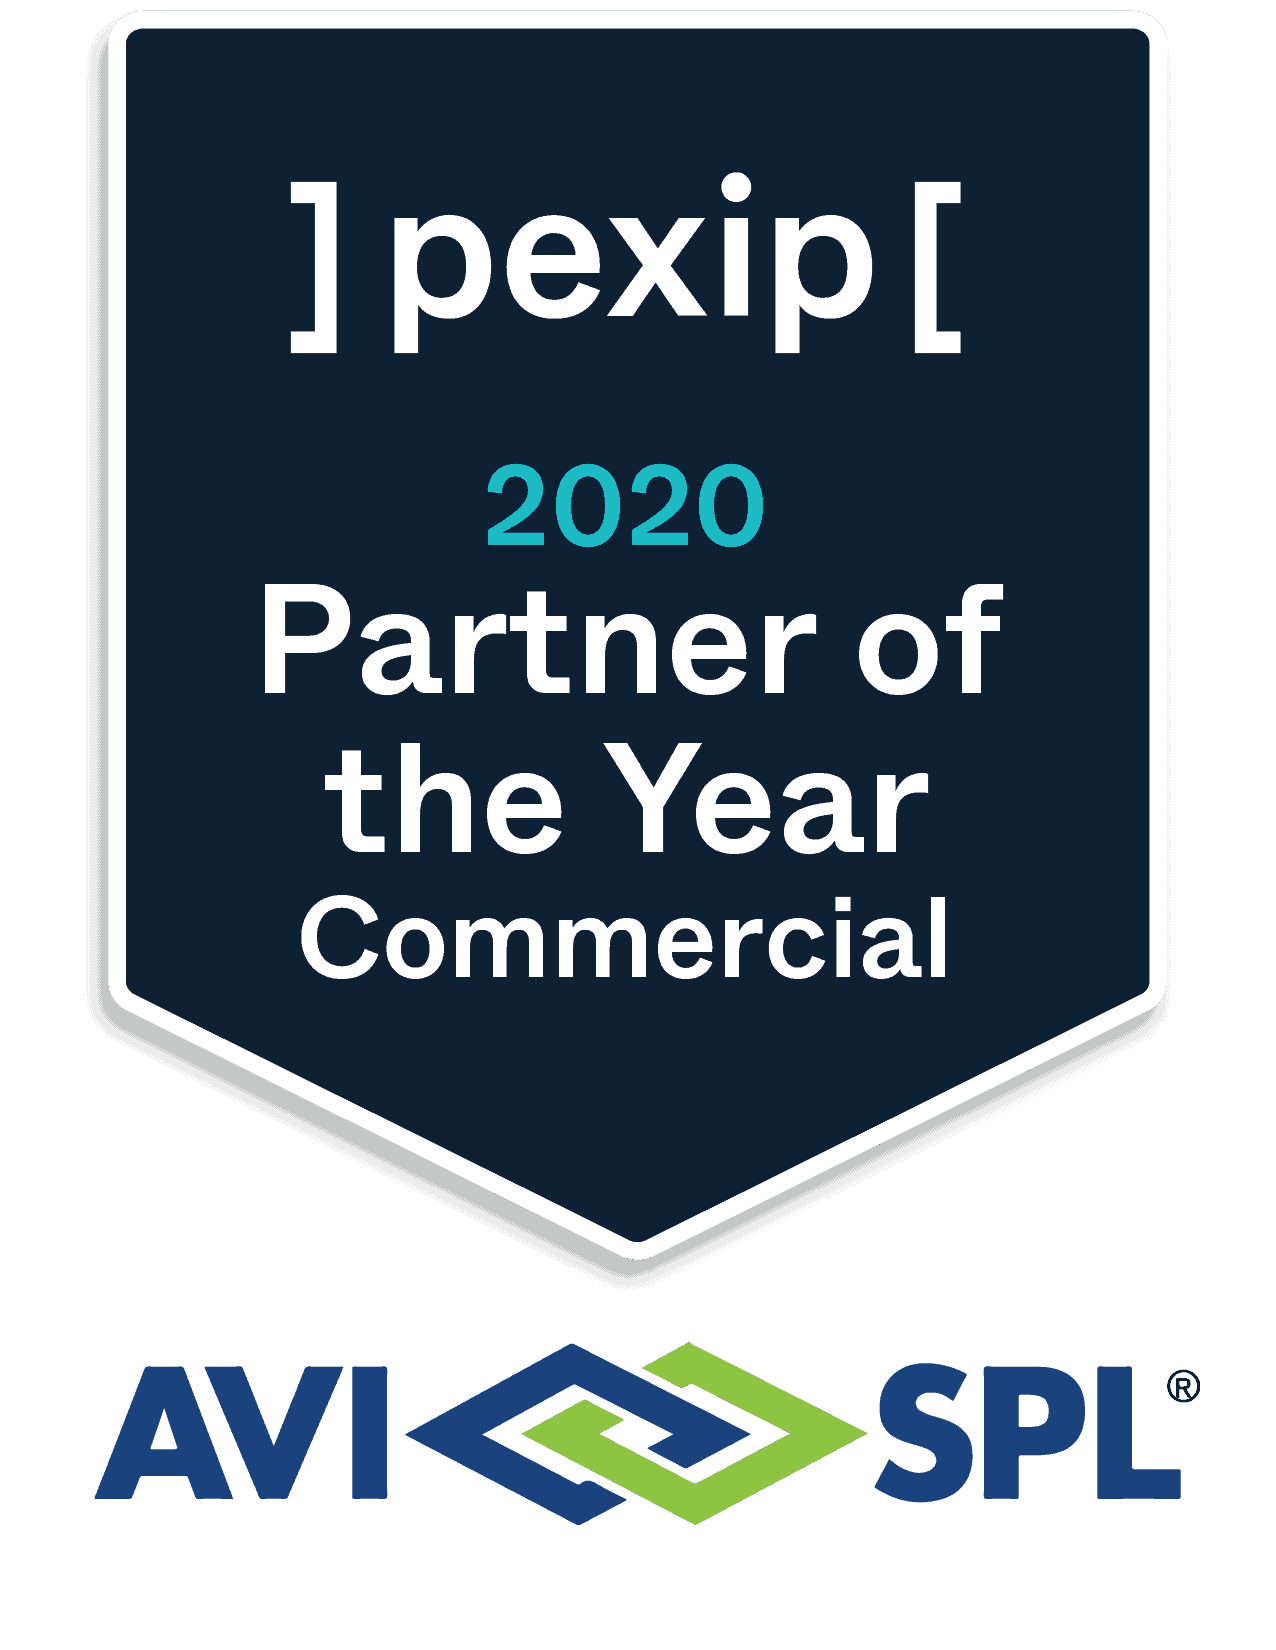 AVI-SPL is Pexip’s Americas Partner of the Year